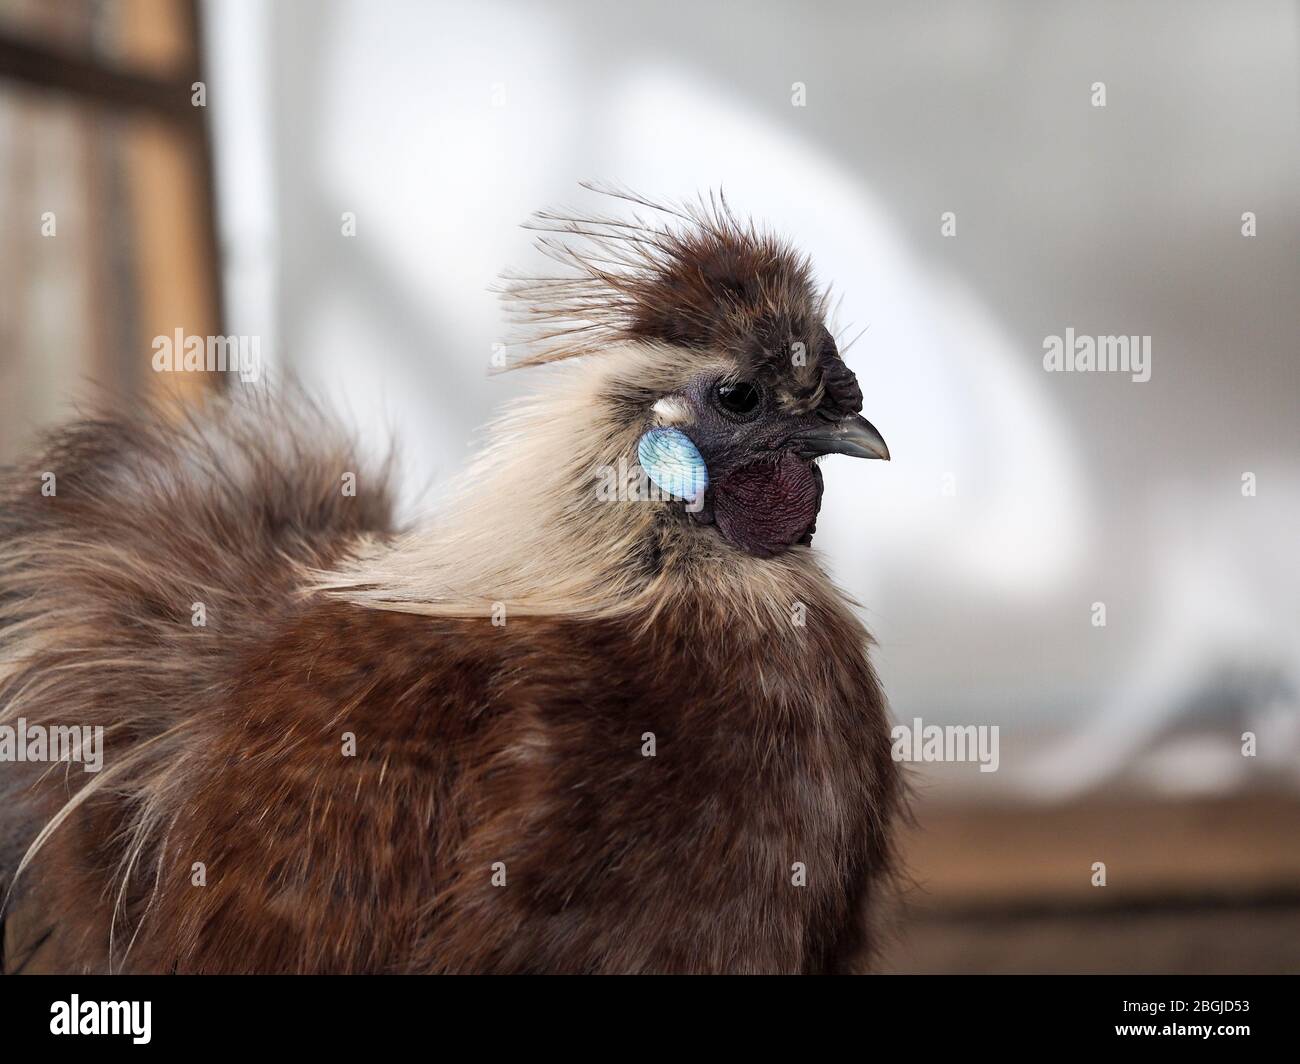 Retrato de un pájaro exótico. Pollo de seda chino Foto de stock